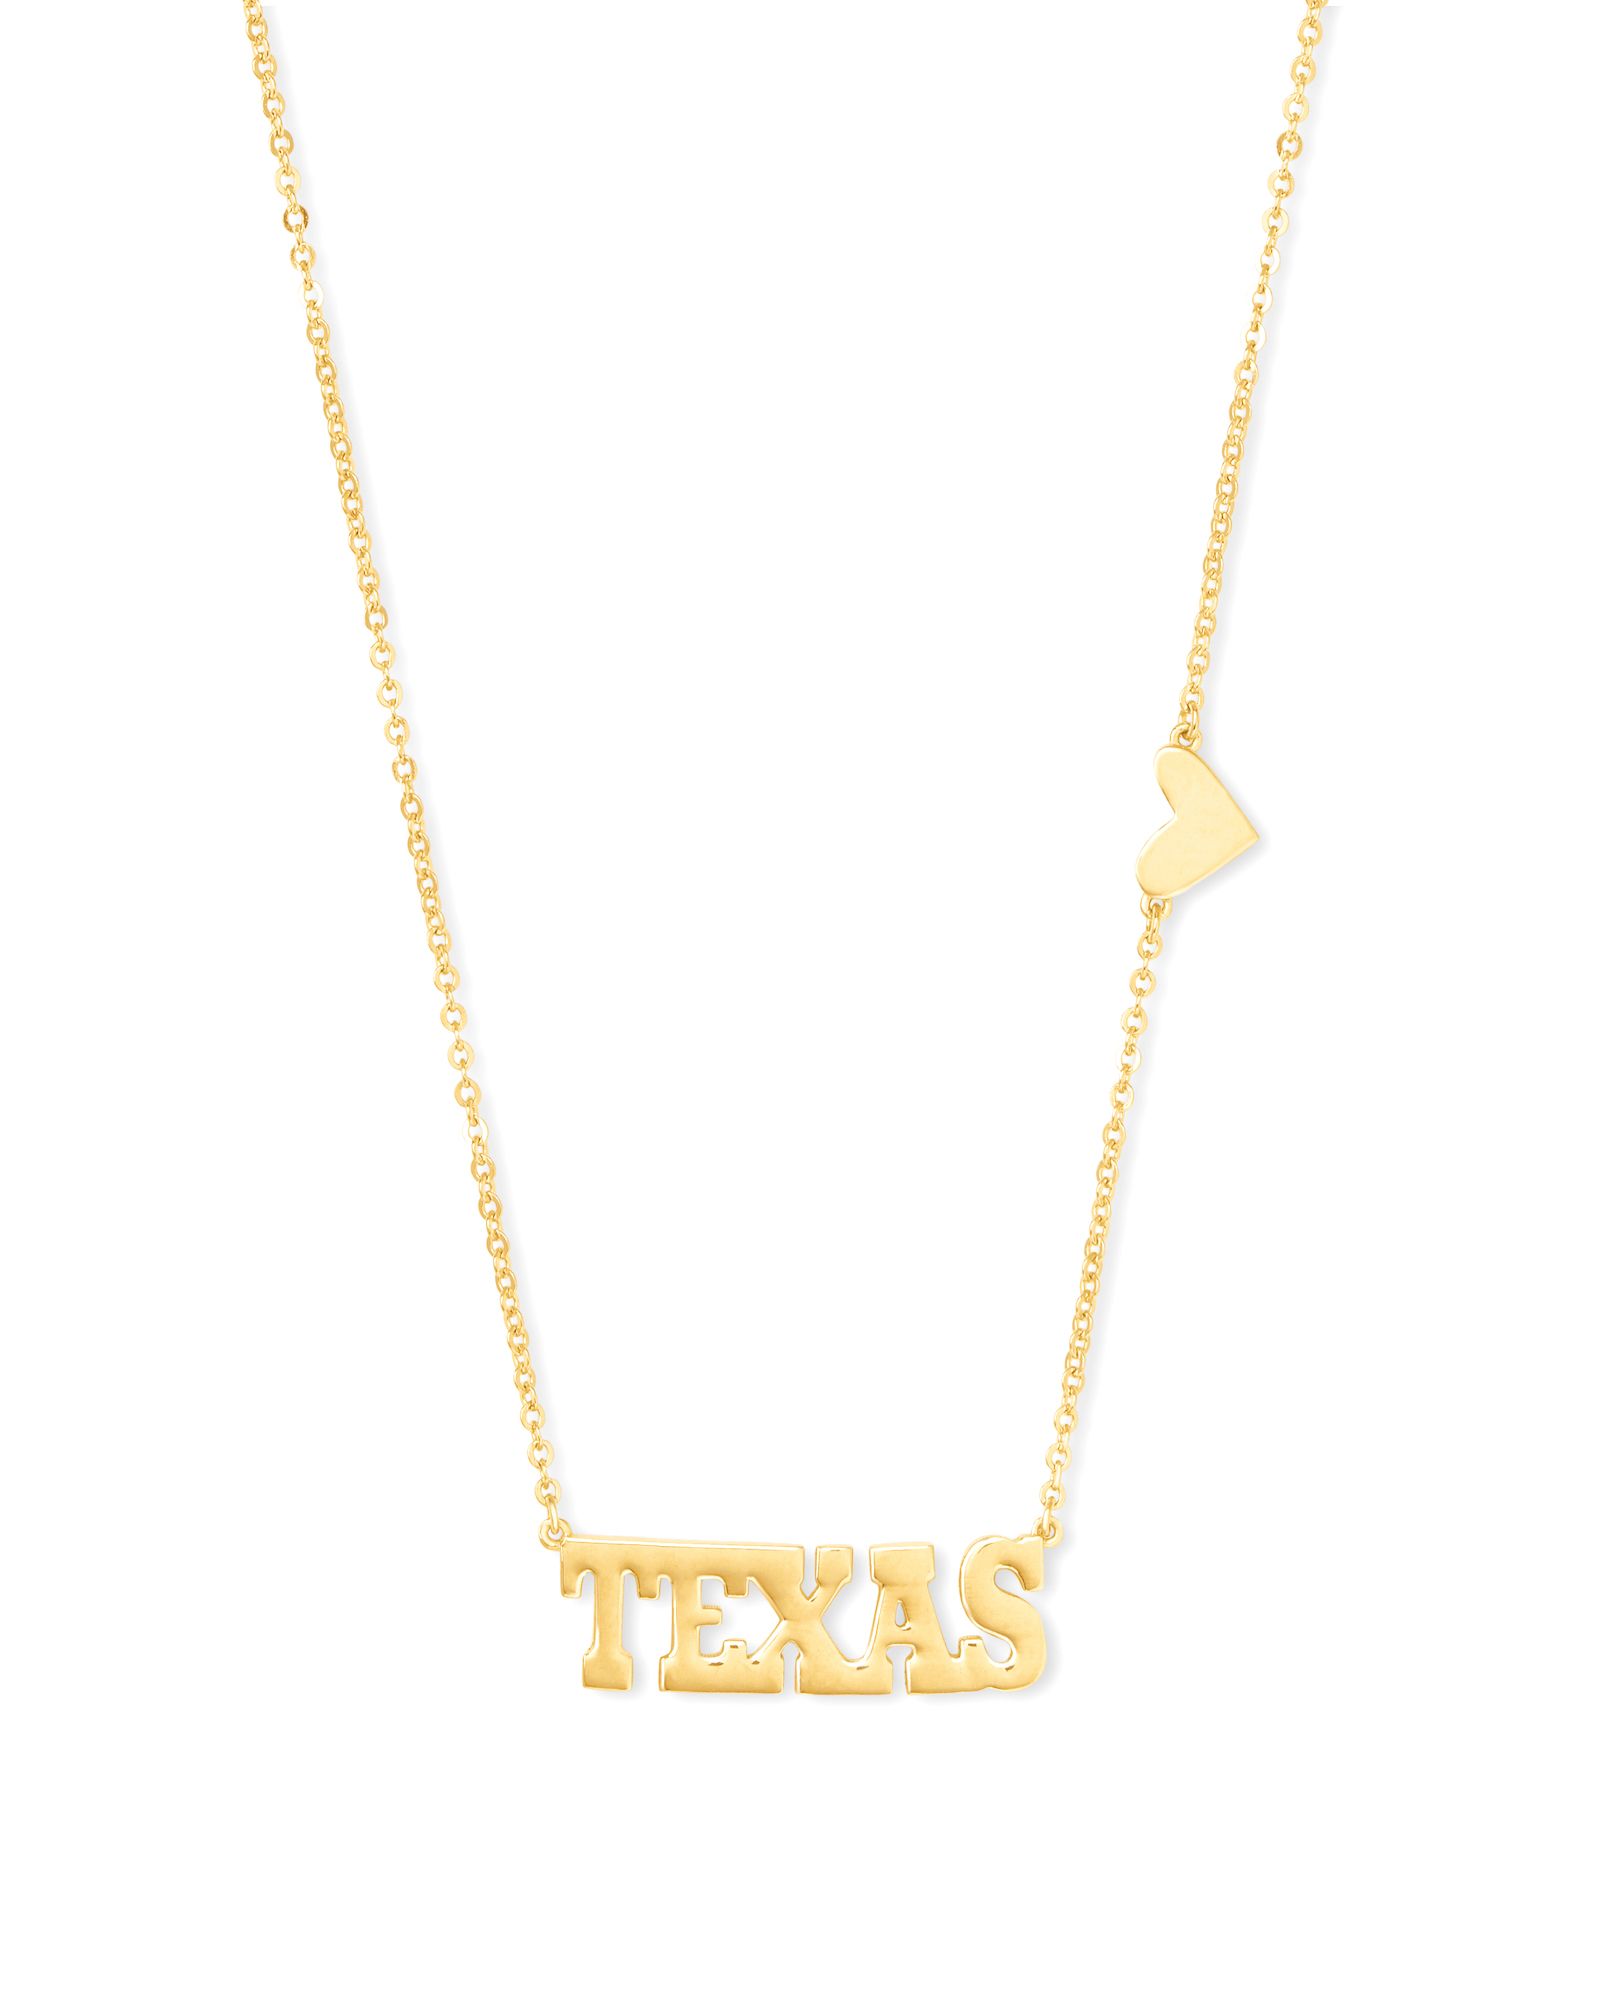 Texas Pendant Necklace in 18k Gold Vermeil | Kendra Scott